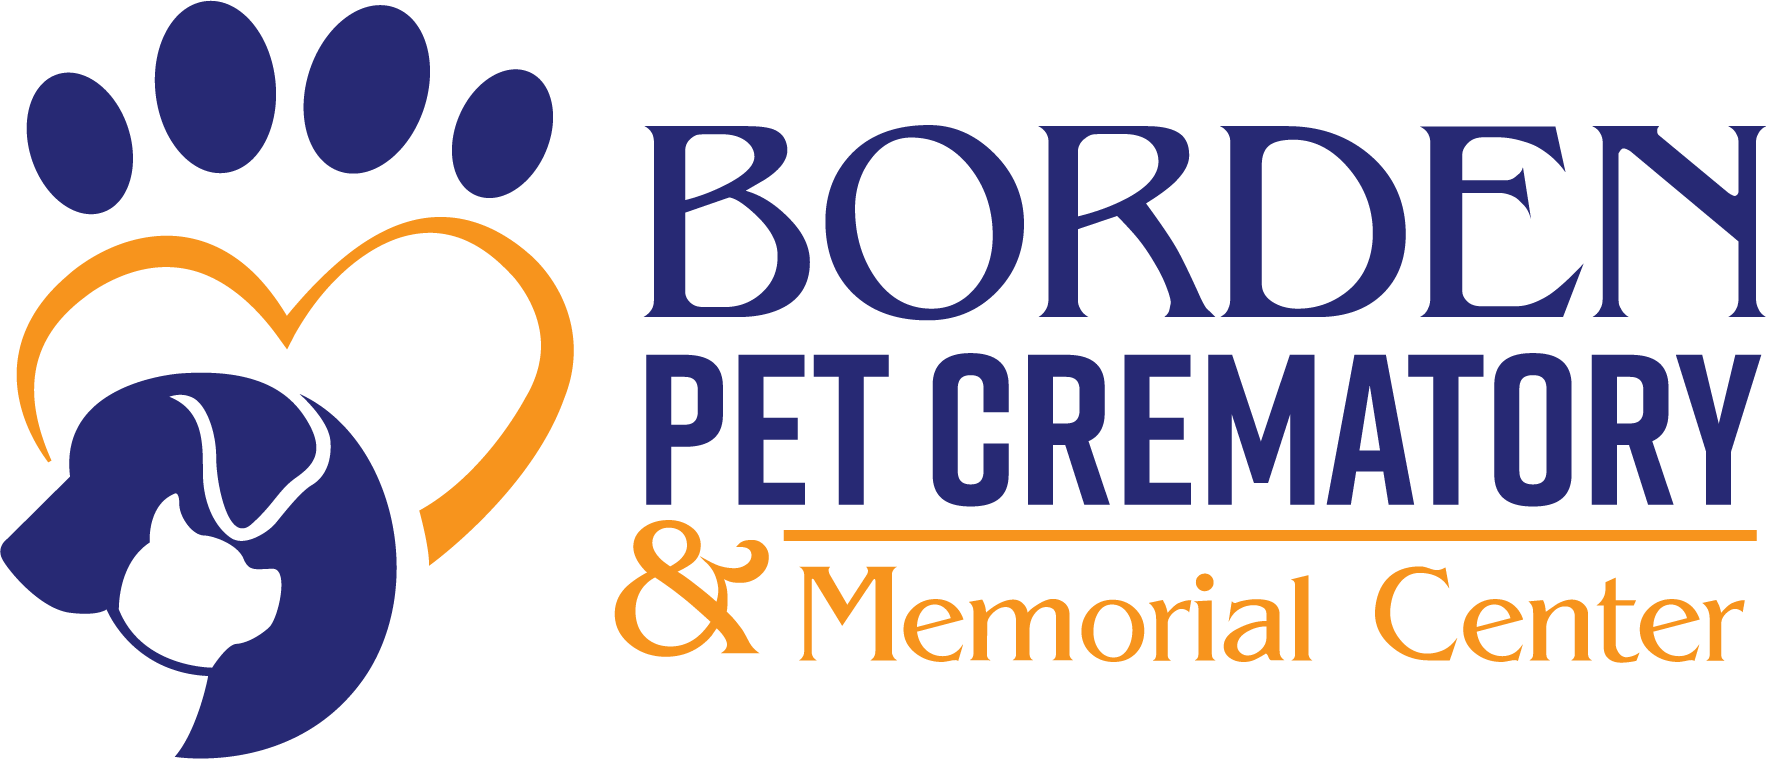 Borden Pet Crematory & Memorial Center